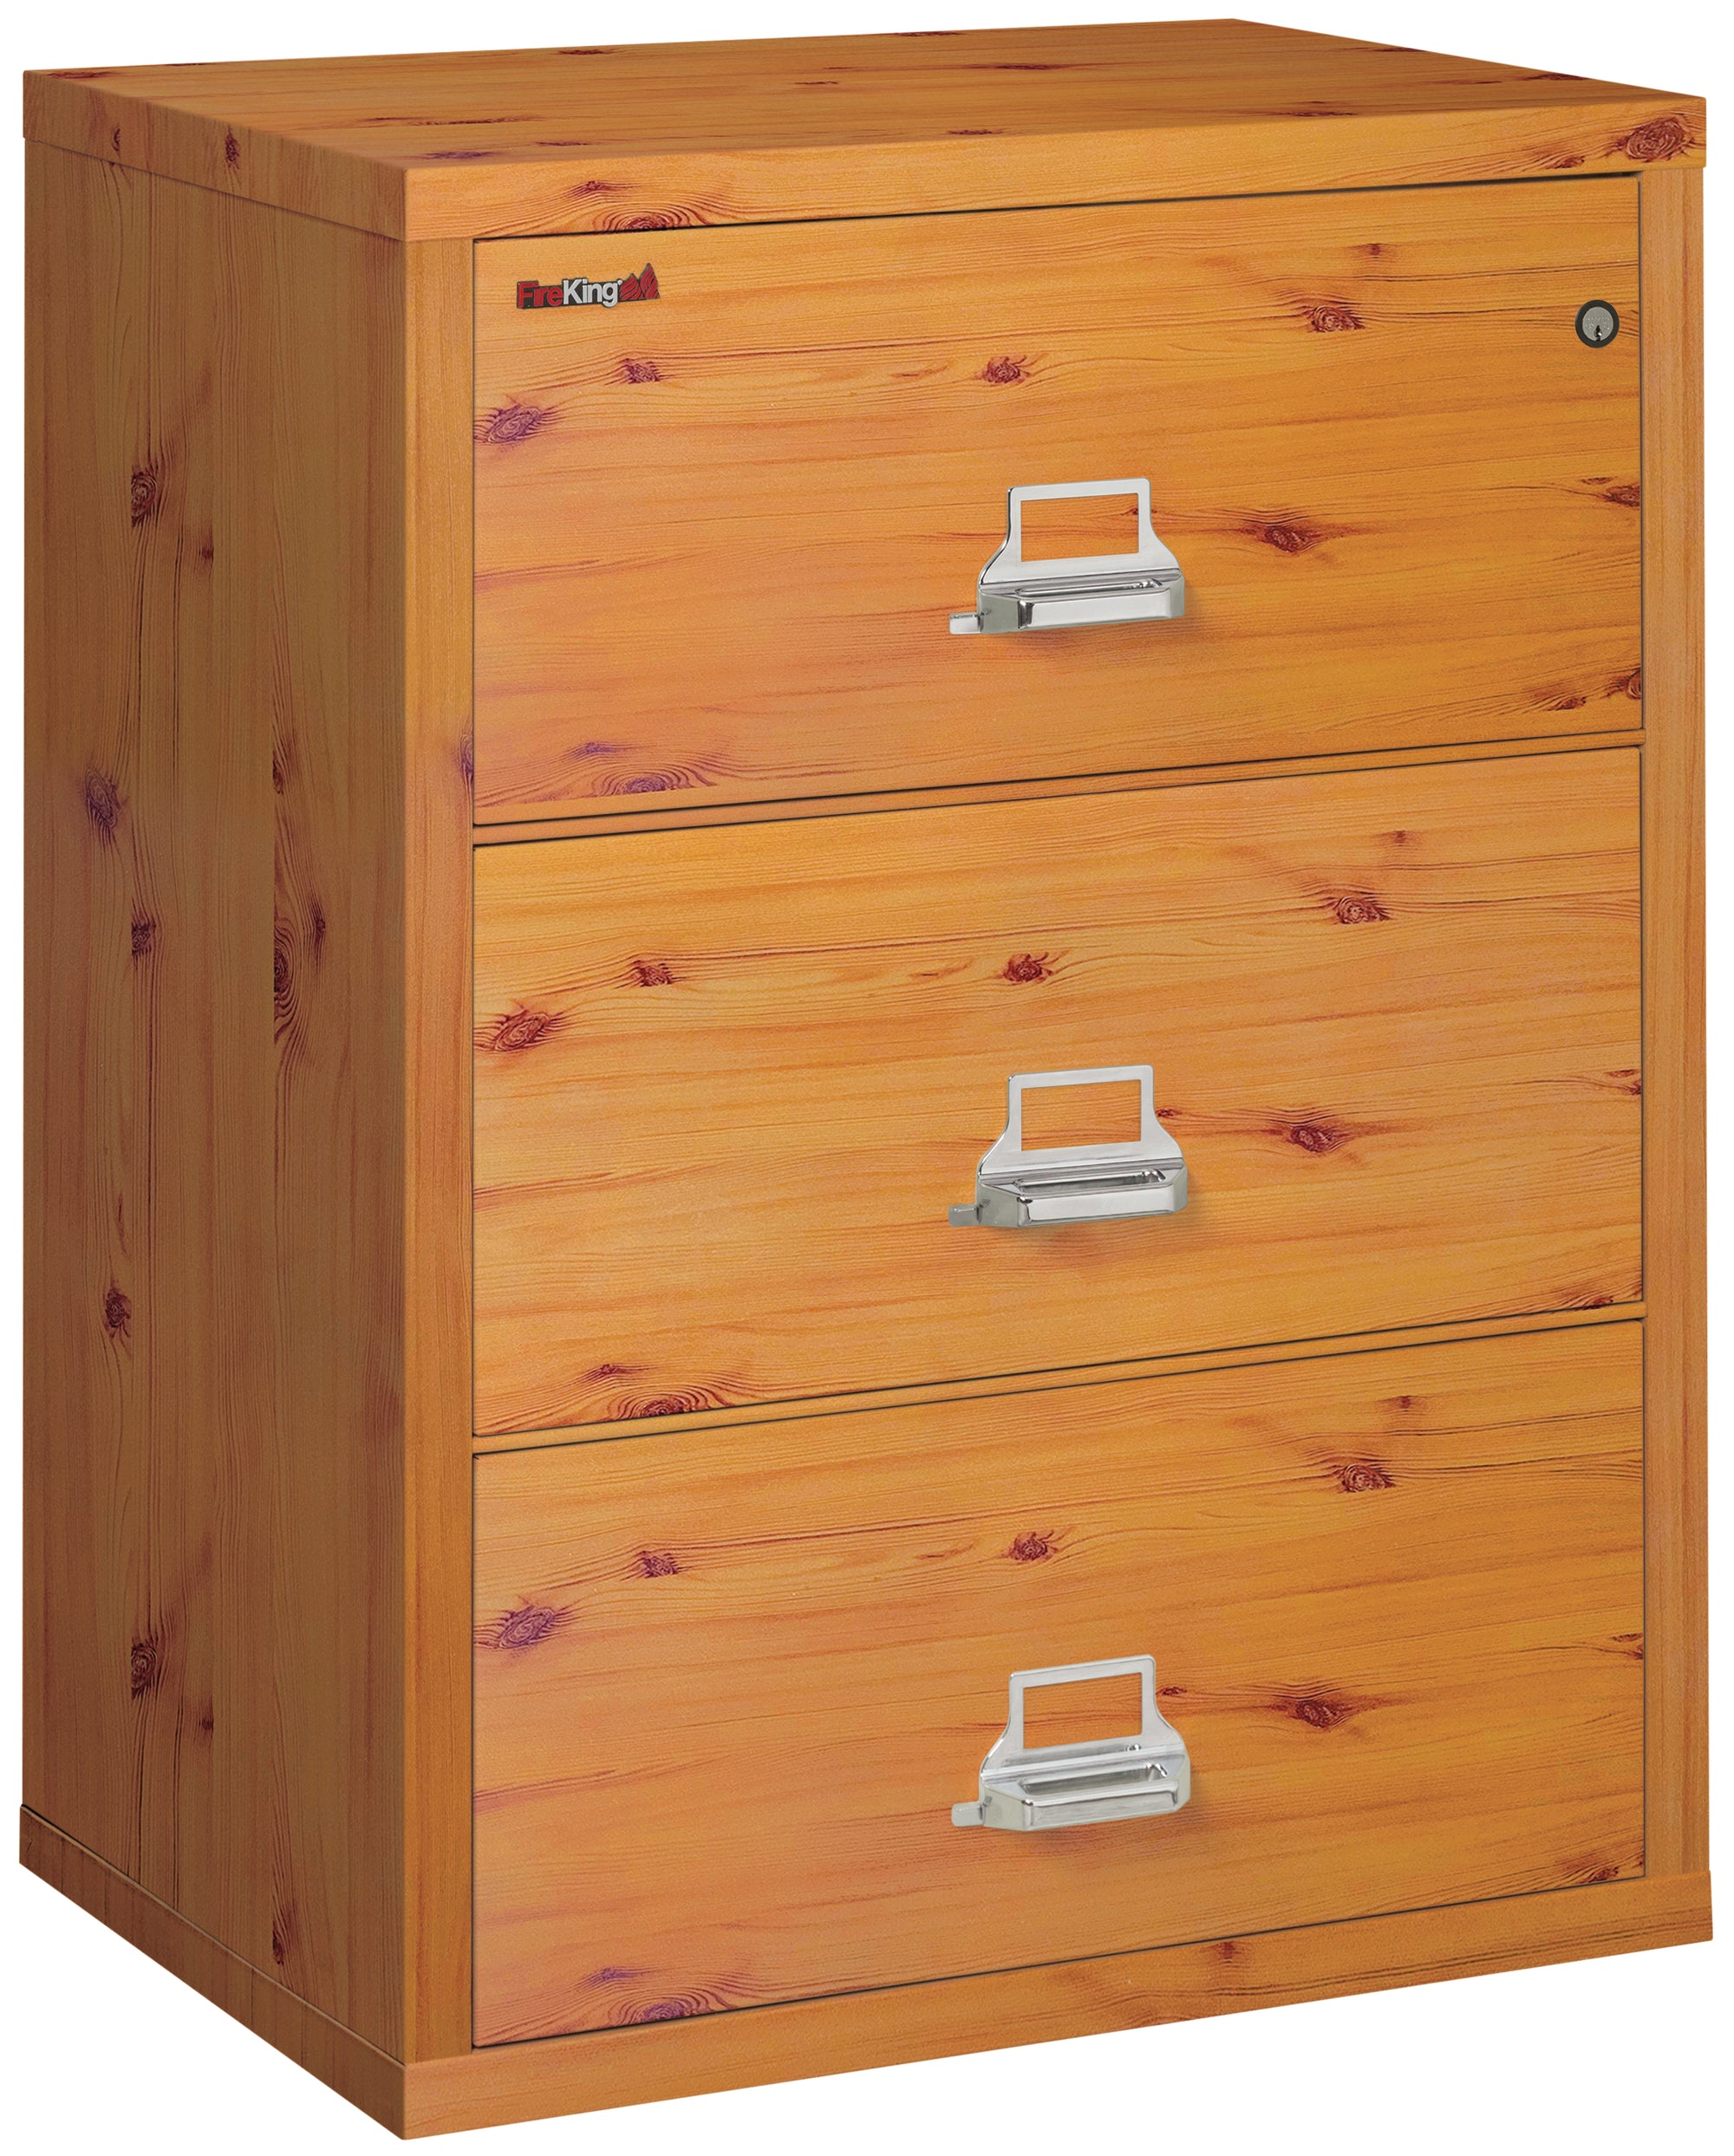 FireKing 3-3122-C Premium Designer Three Drawer 31" W Lateral Fire File Cabinet Calcutta Marble